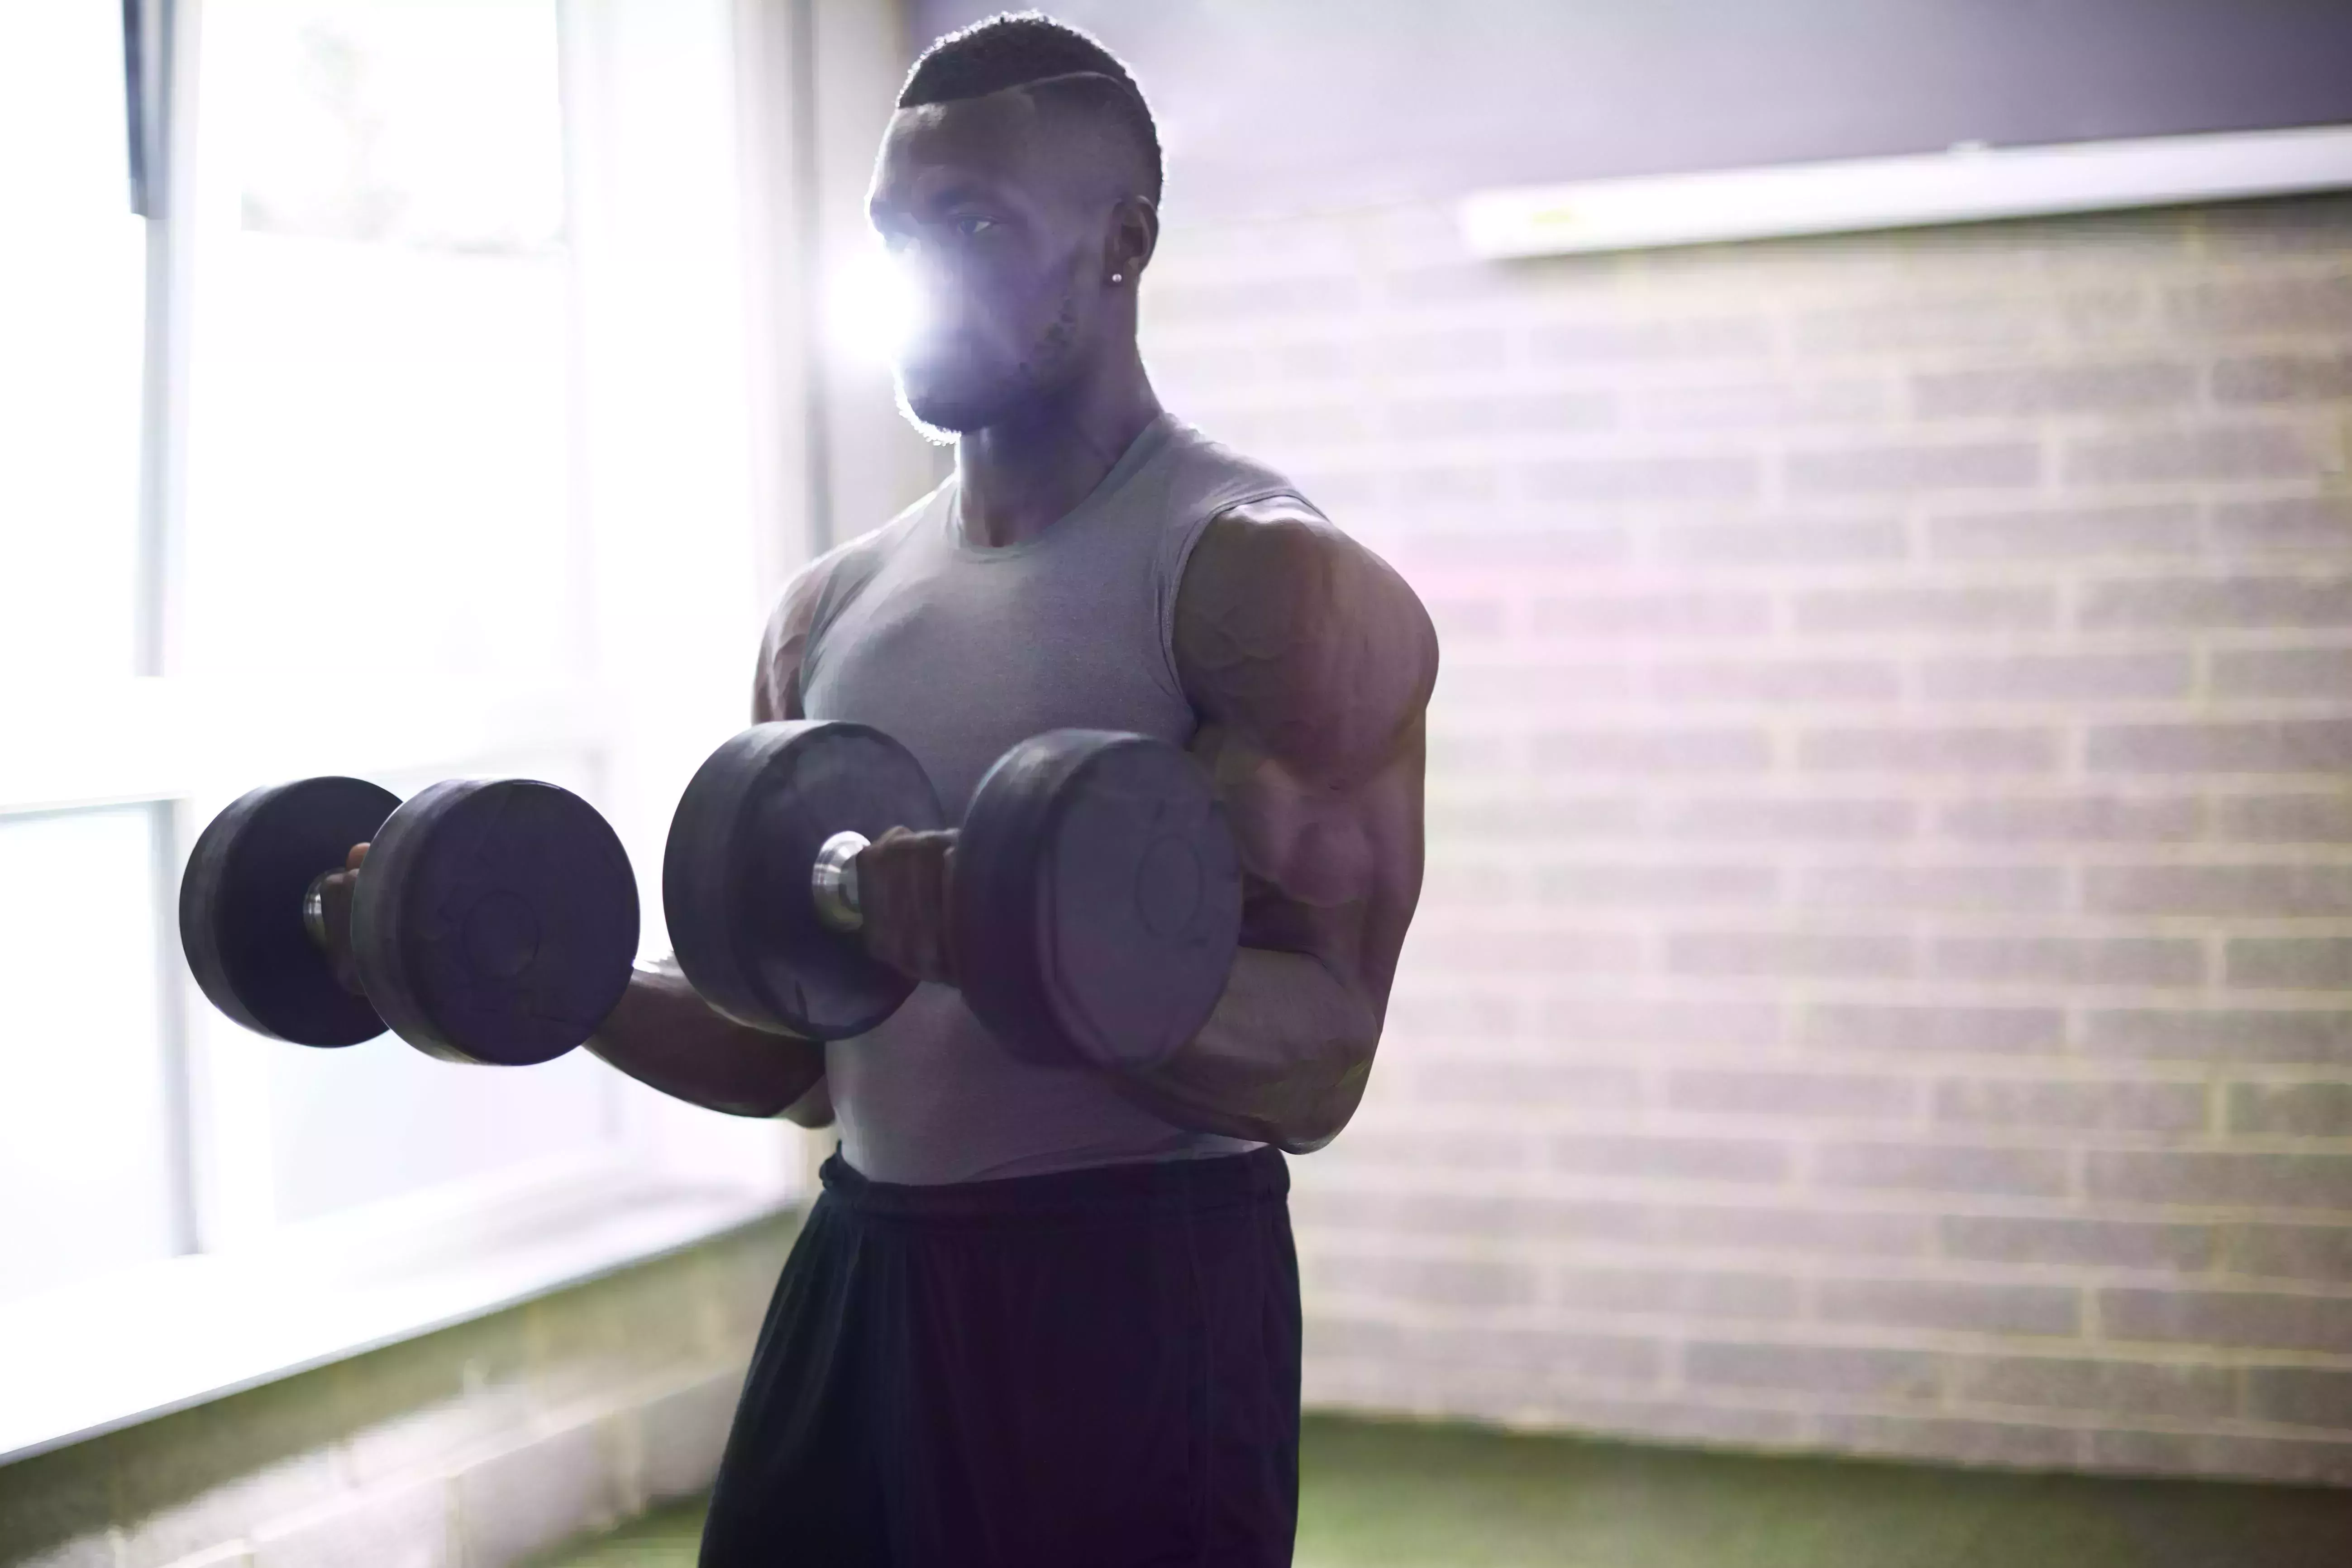 man lifting dumbbells in gym